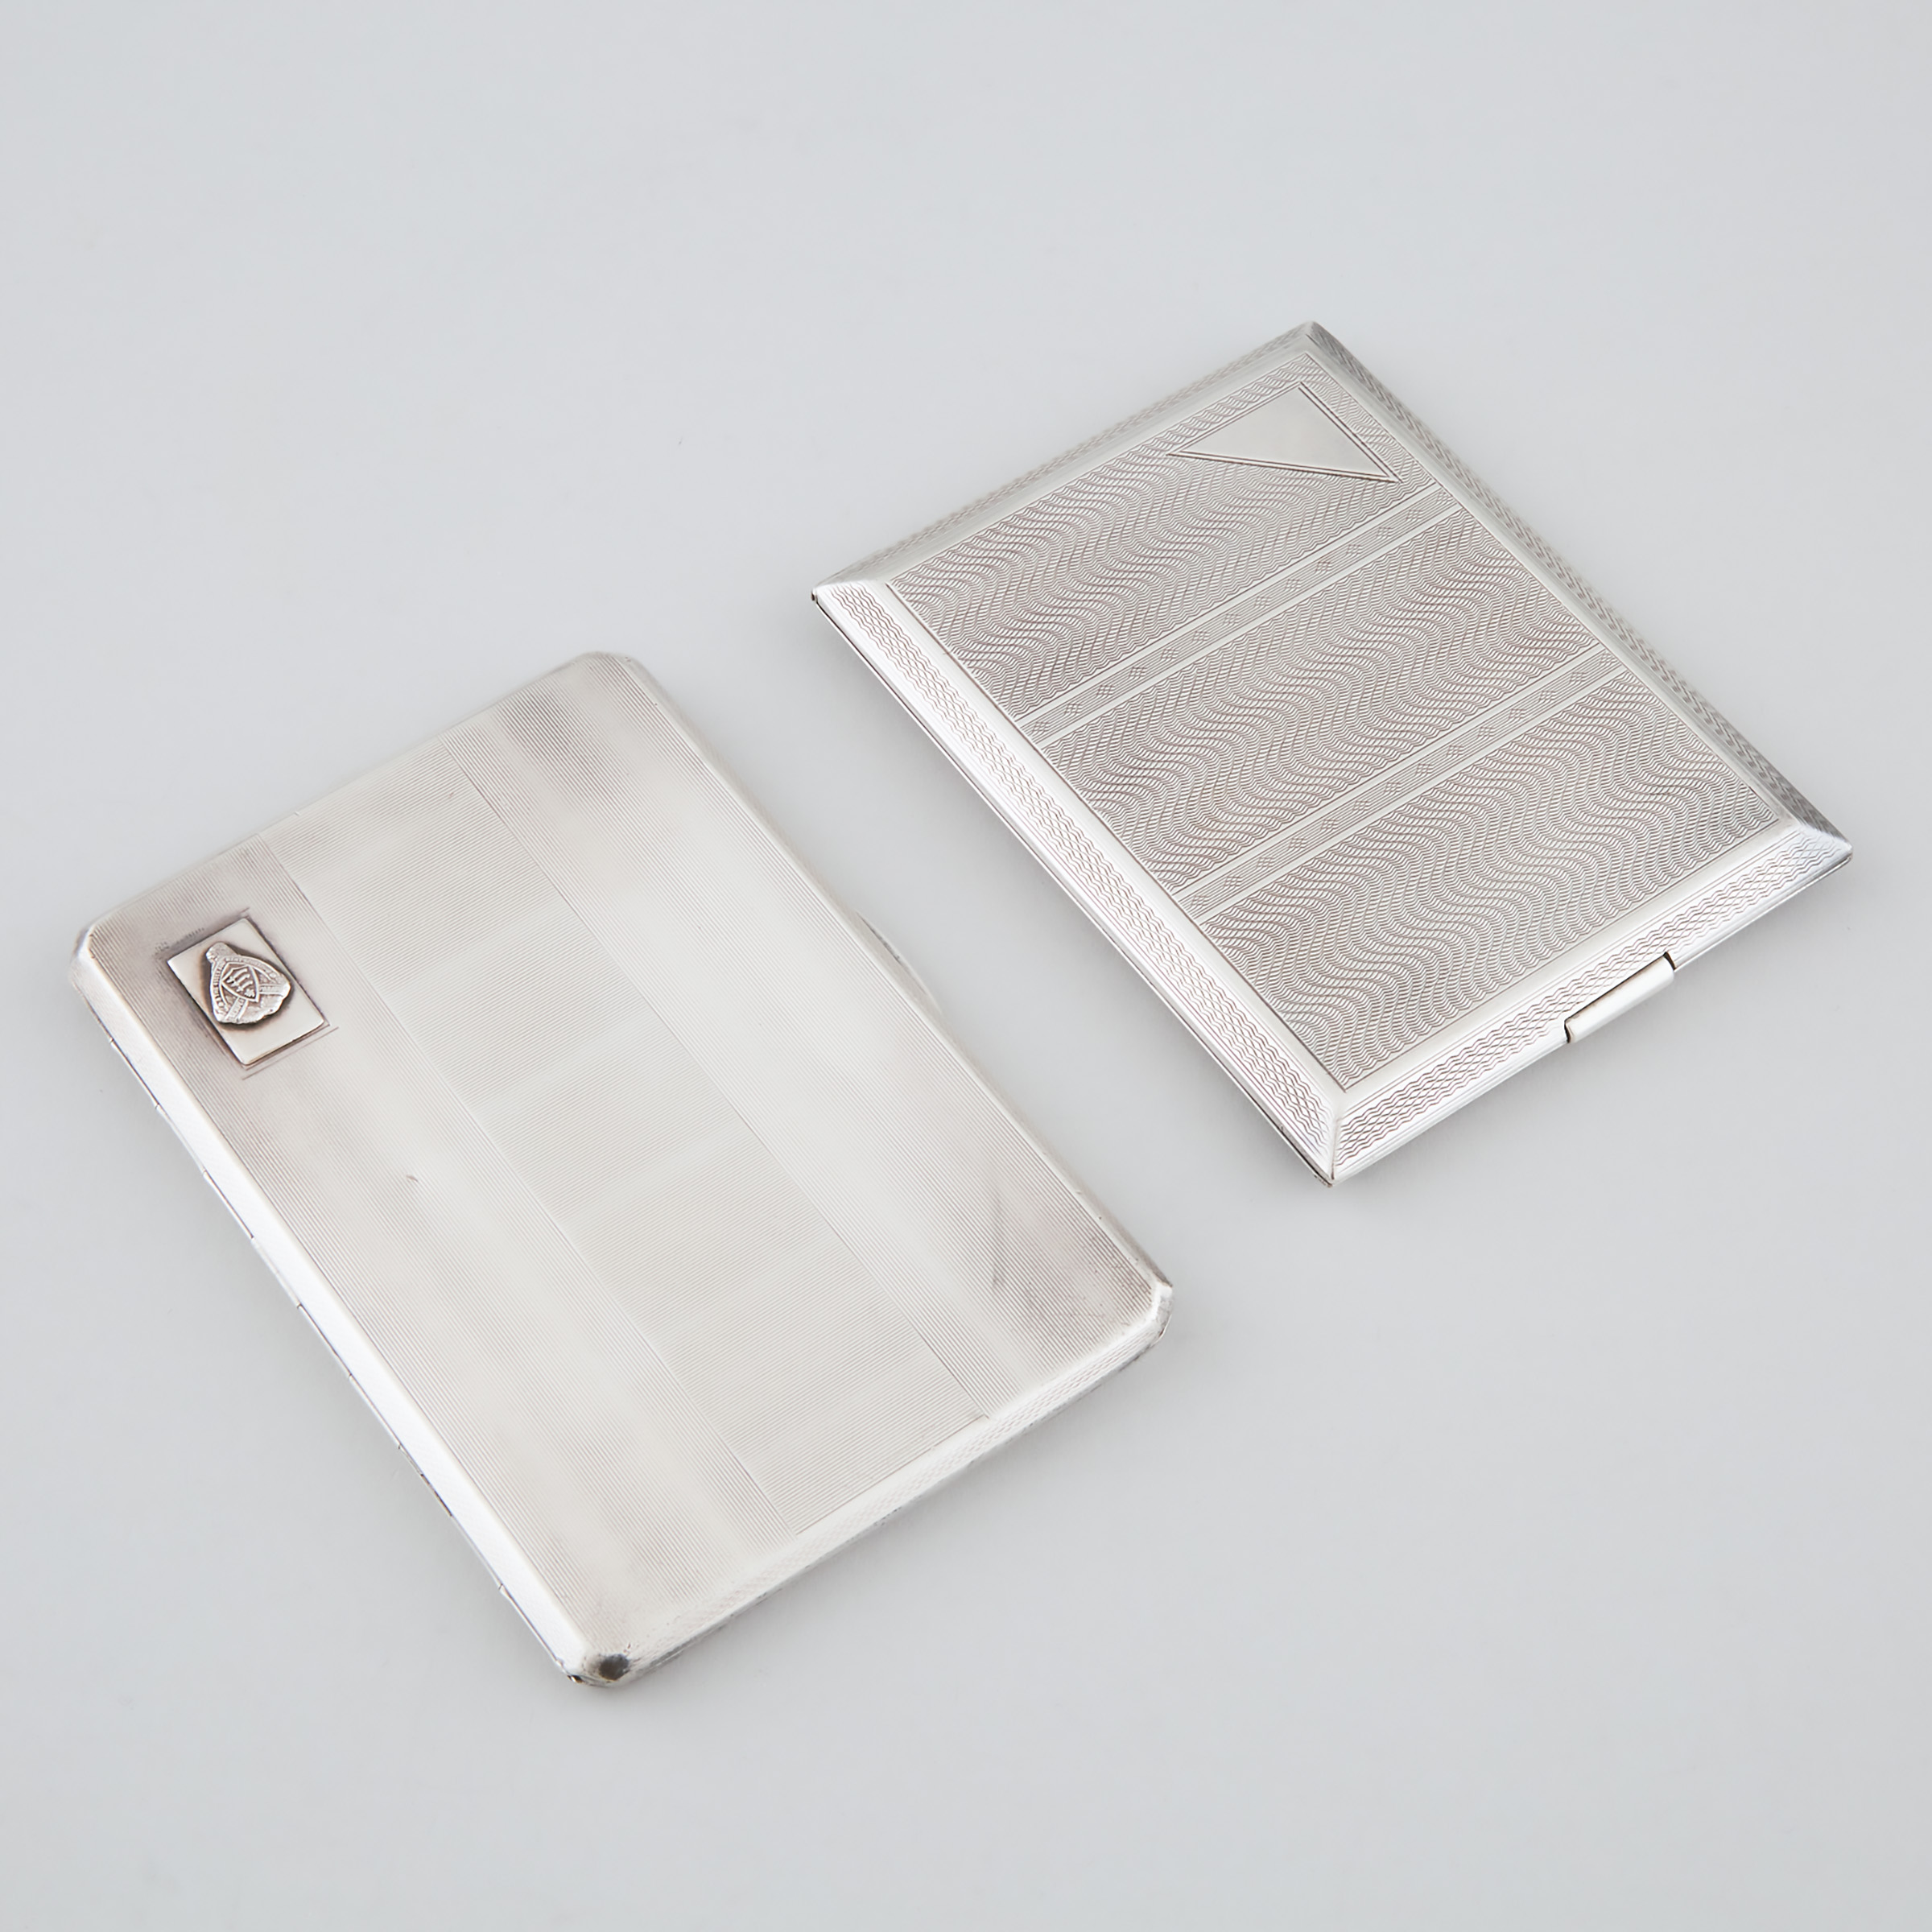 Two English Silver Cigarette Cases  2a56ac